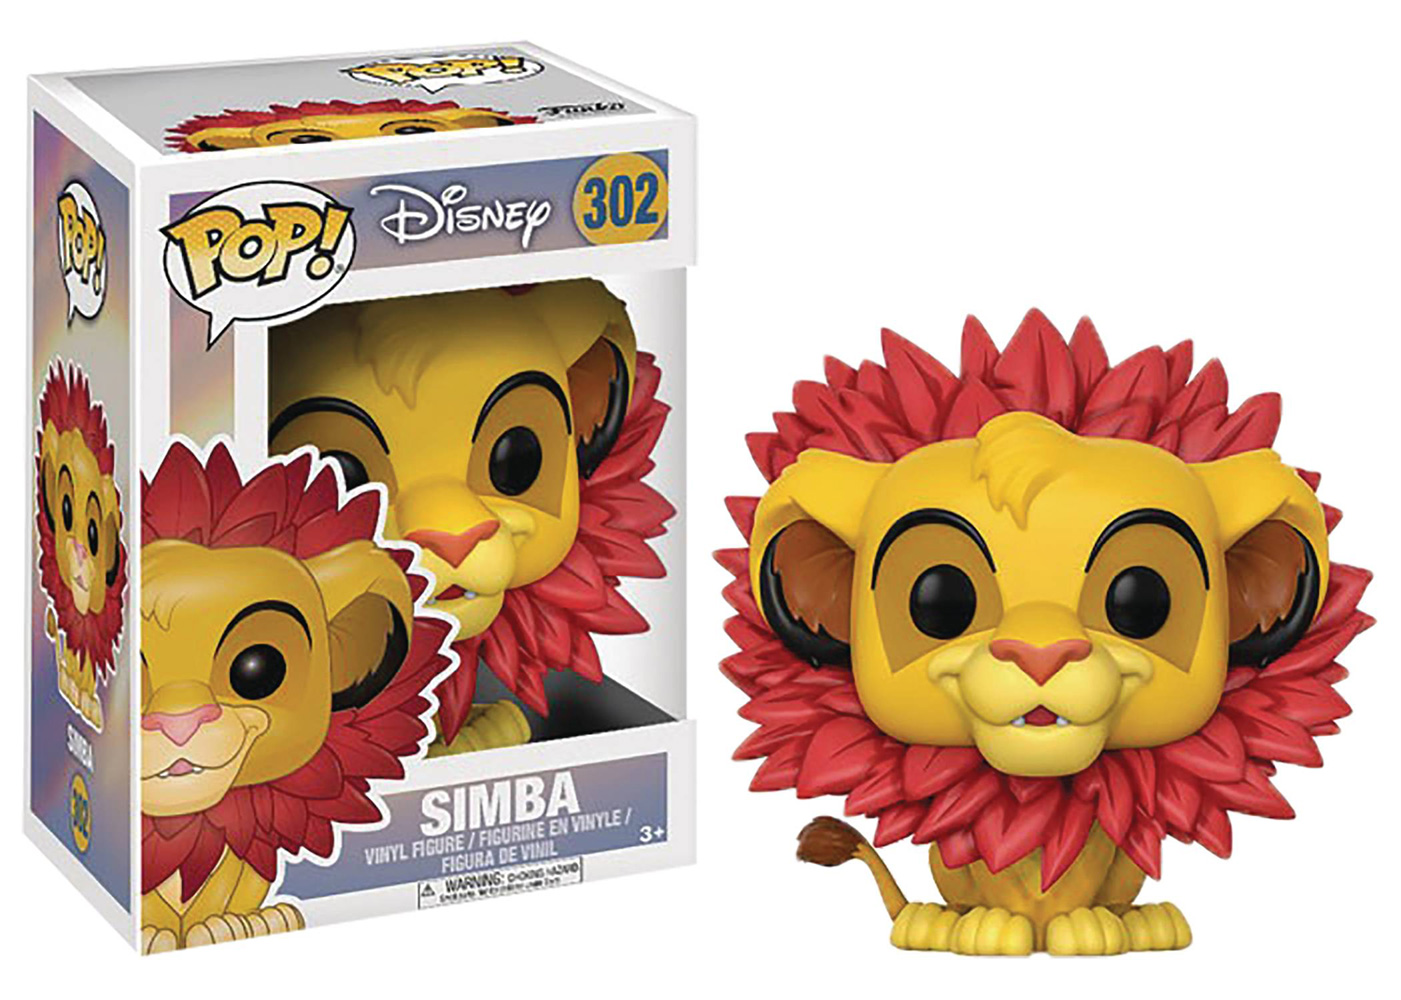 Image: Pop! Lion King Vinyl Figure: Simba Leaf Mane  - Funko